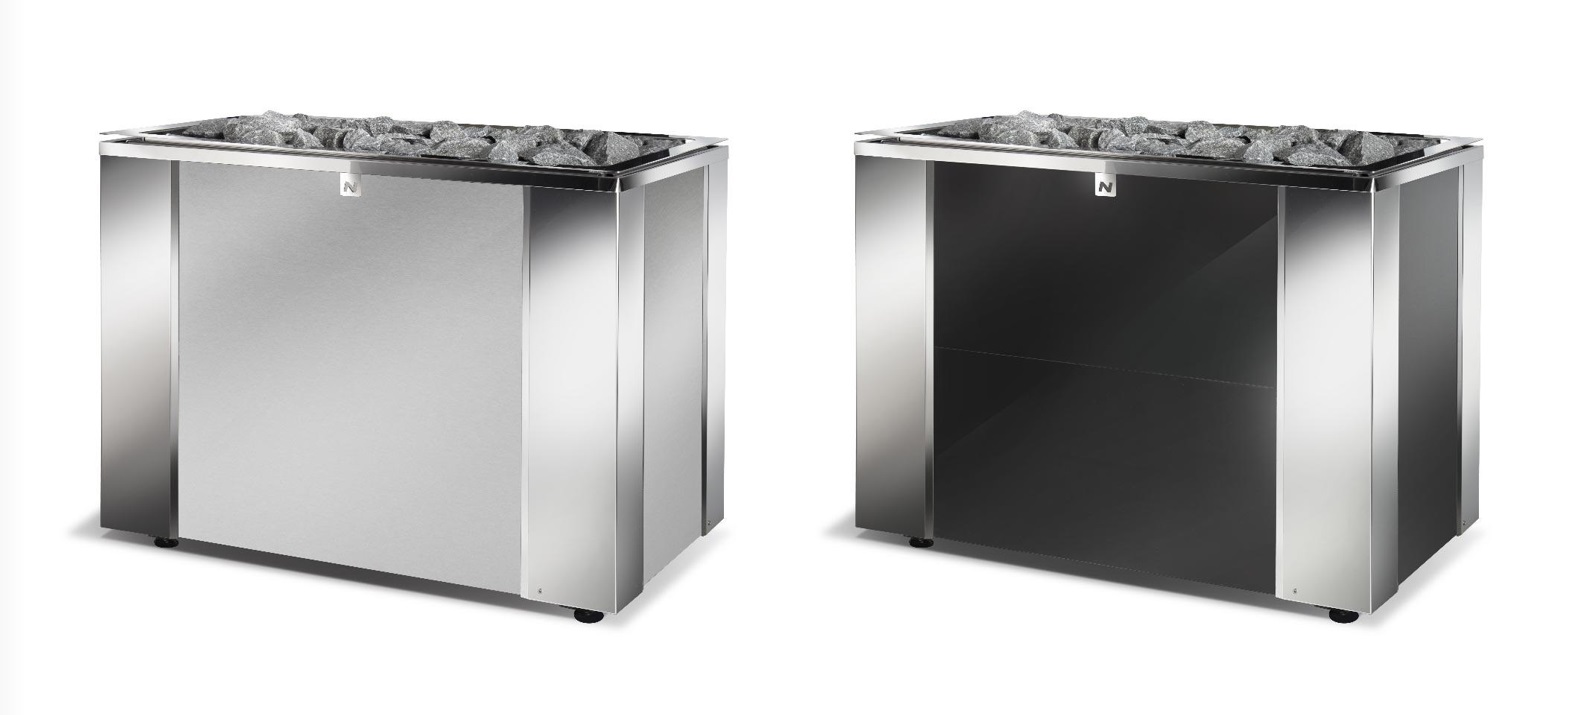 Narvi Style Pro -sähkökiuasmallit 18–33 kW | Narvi Style Pro electrical sauna heater models 18–33 kW